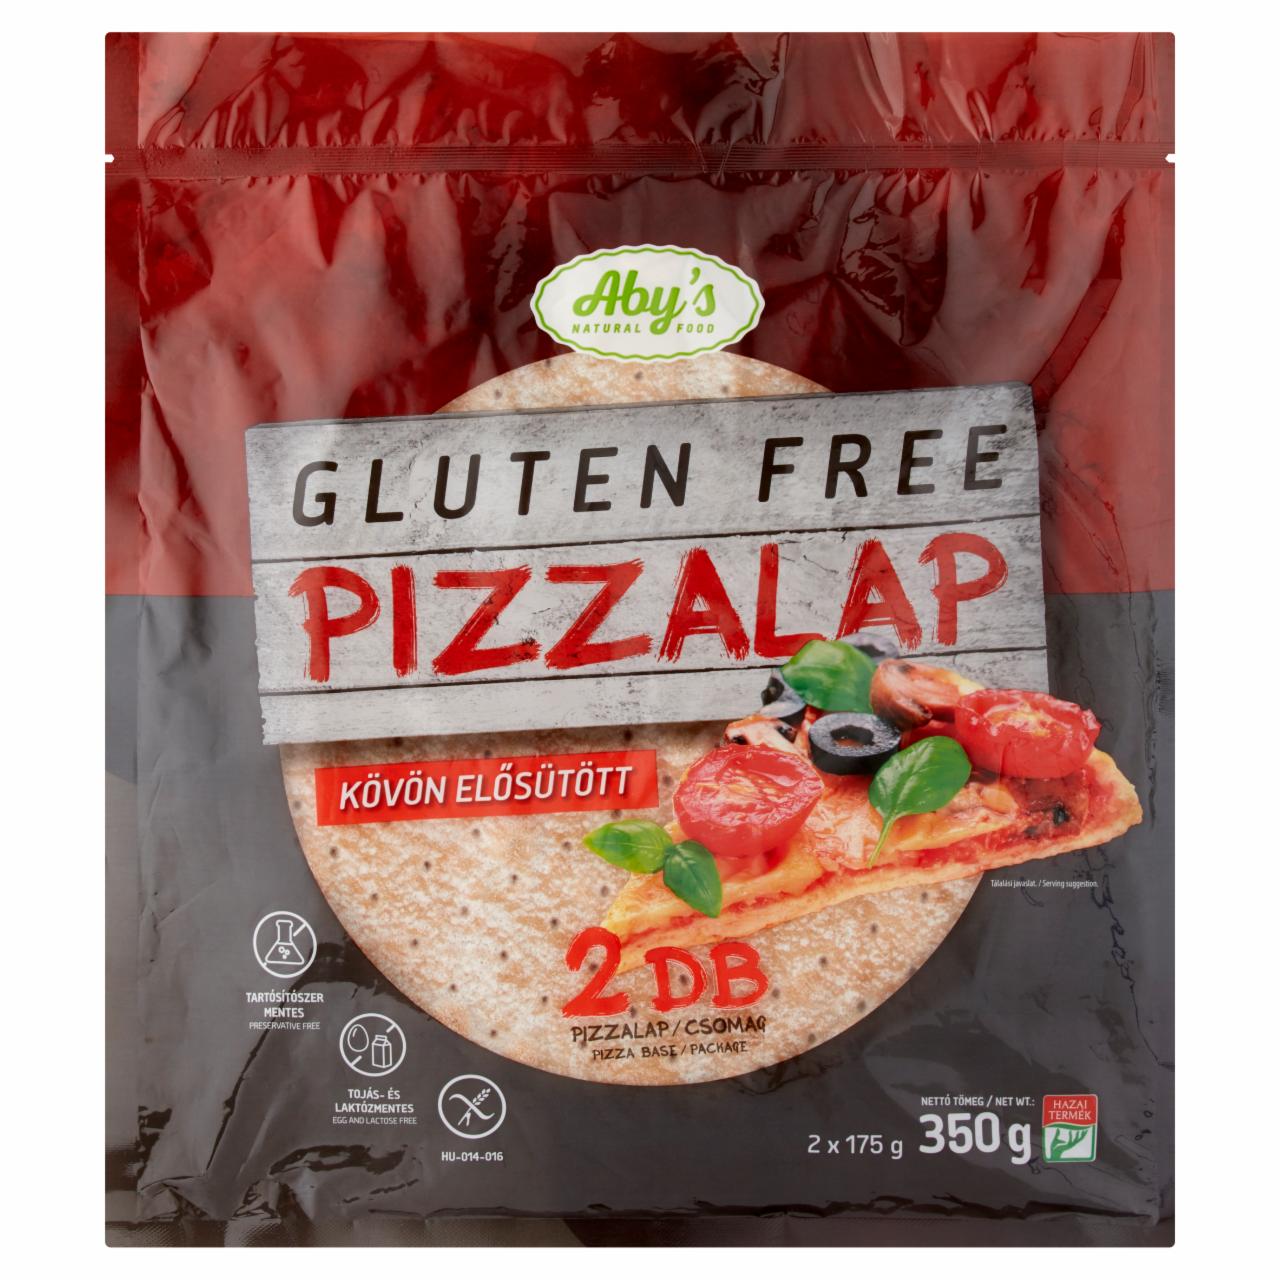 Képek - Aby's Gluten Free pizzalap 2 x 175 g (350 g)